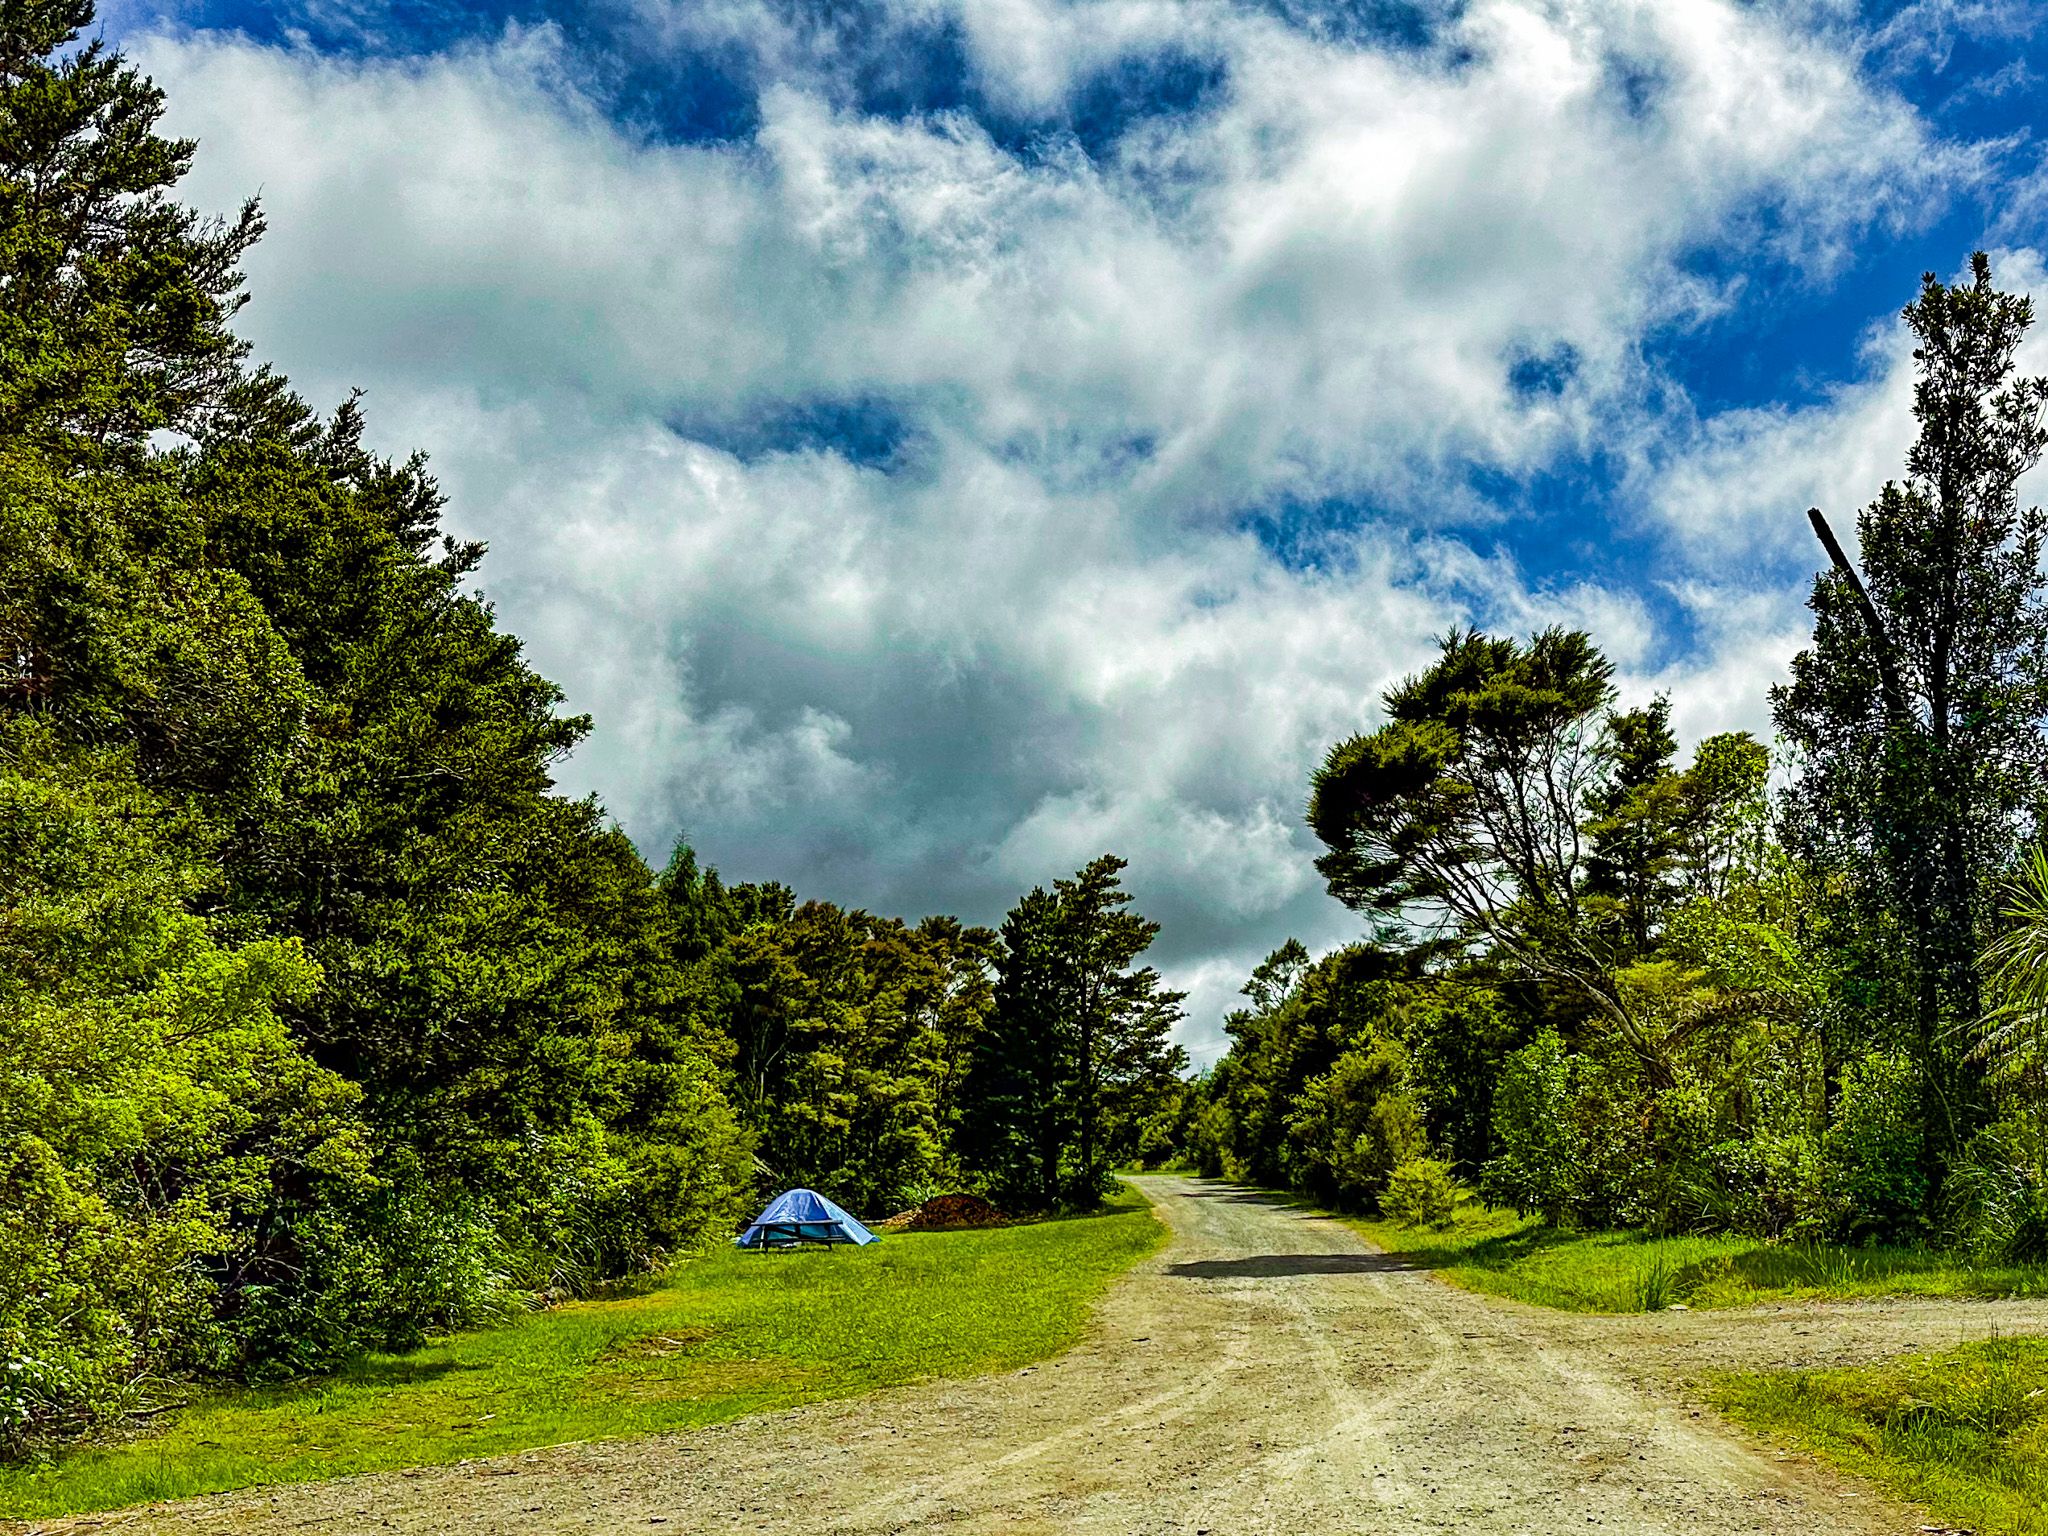 DOC camp site at Puketi Forest